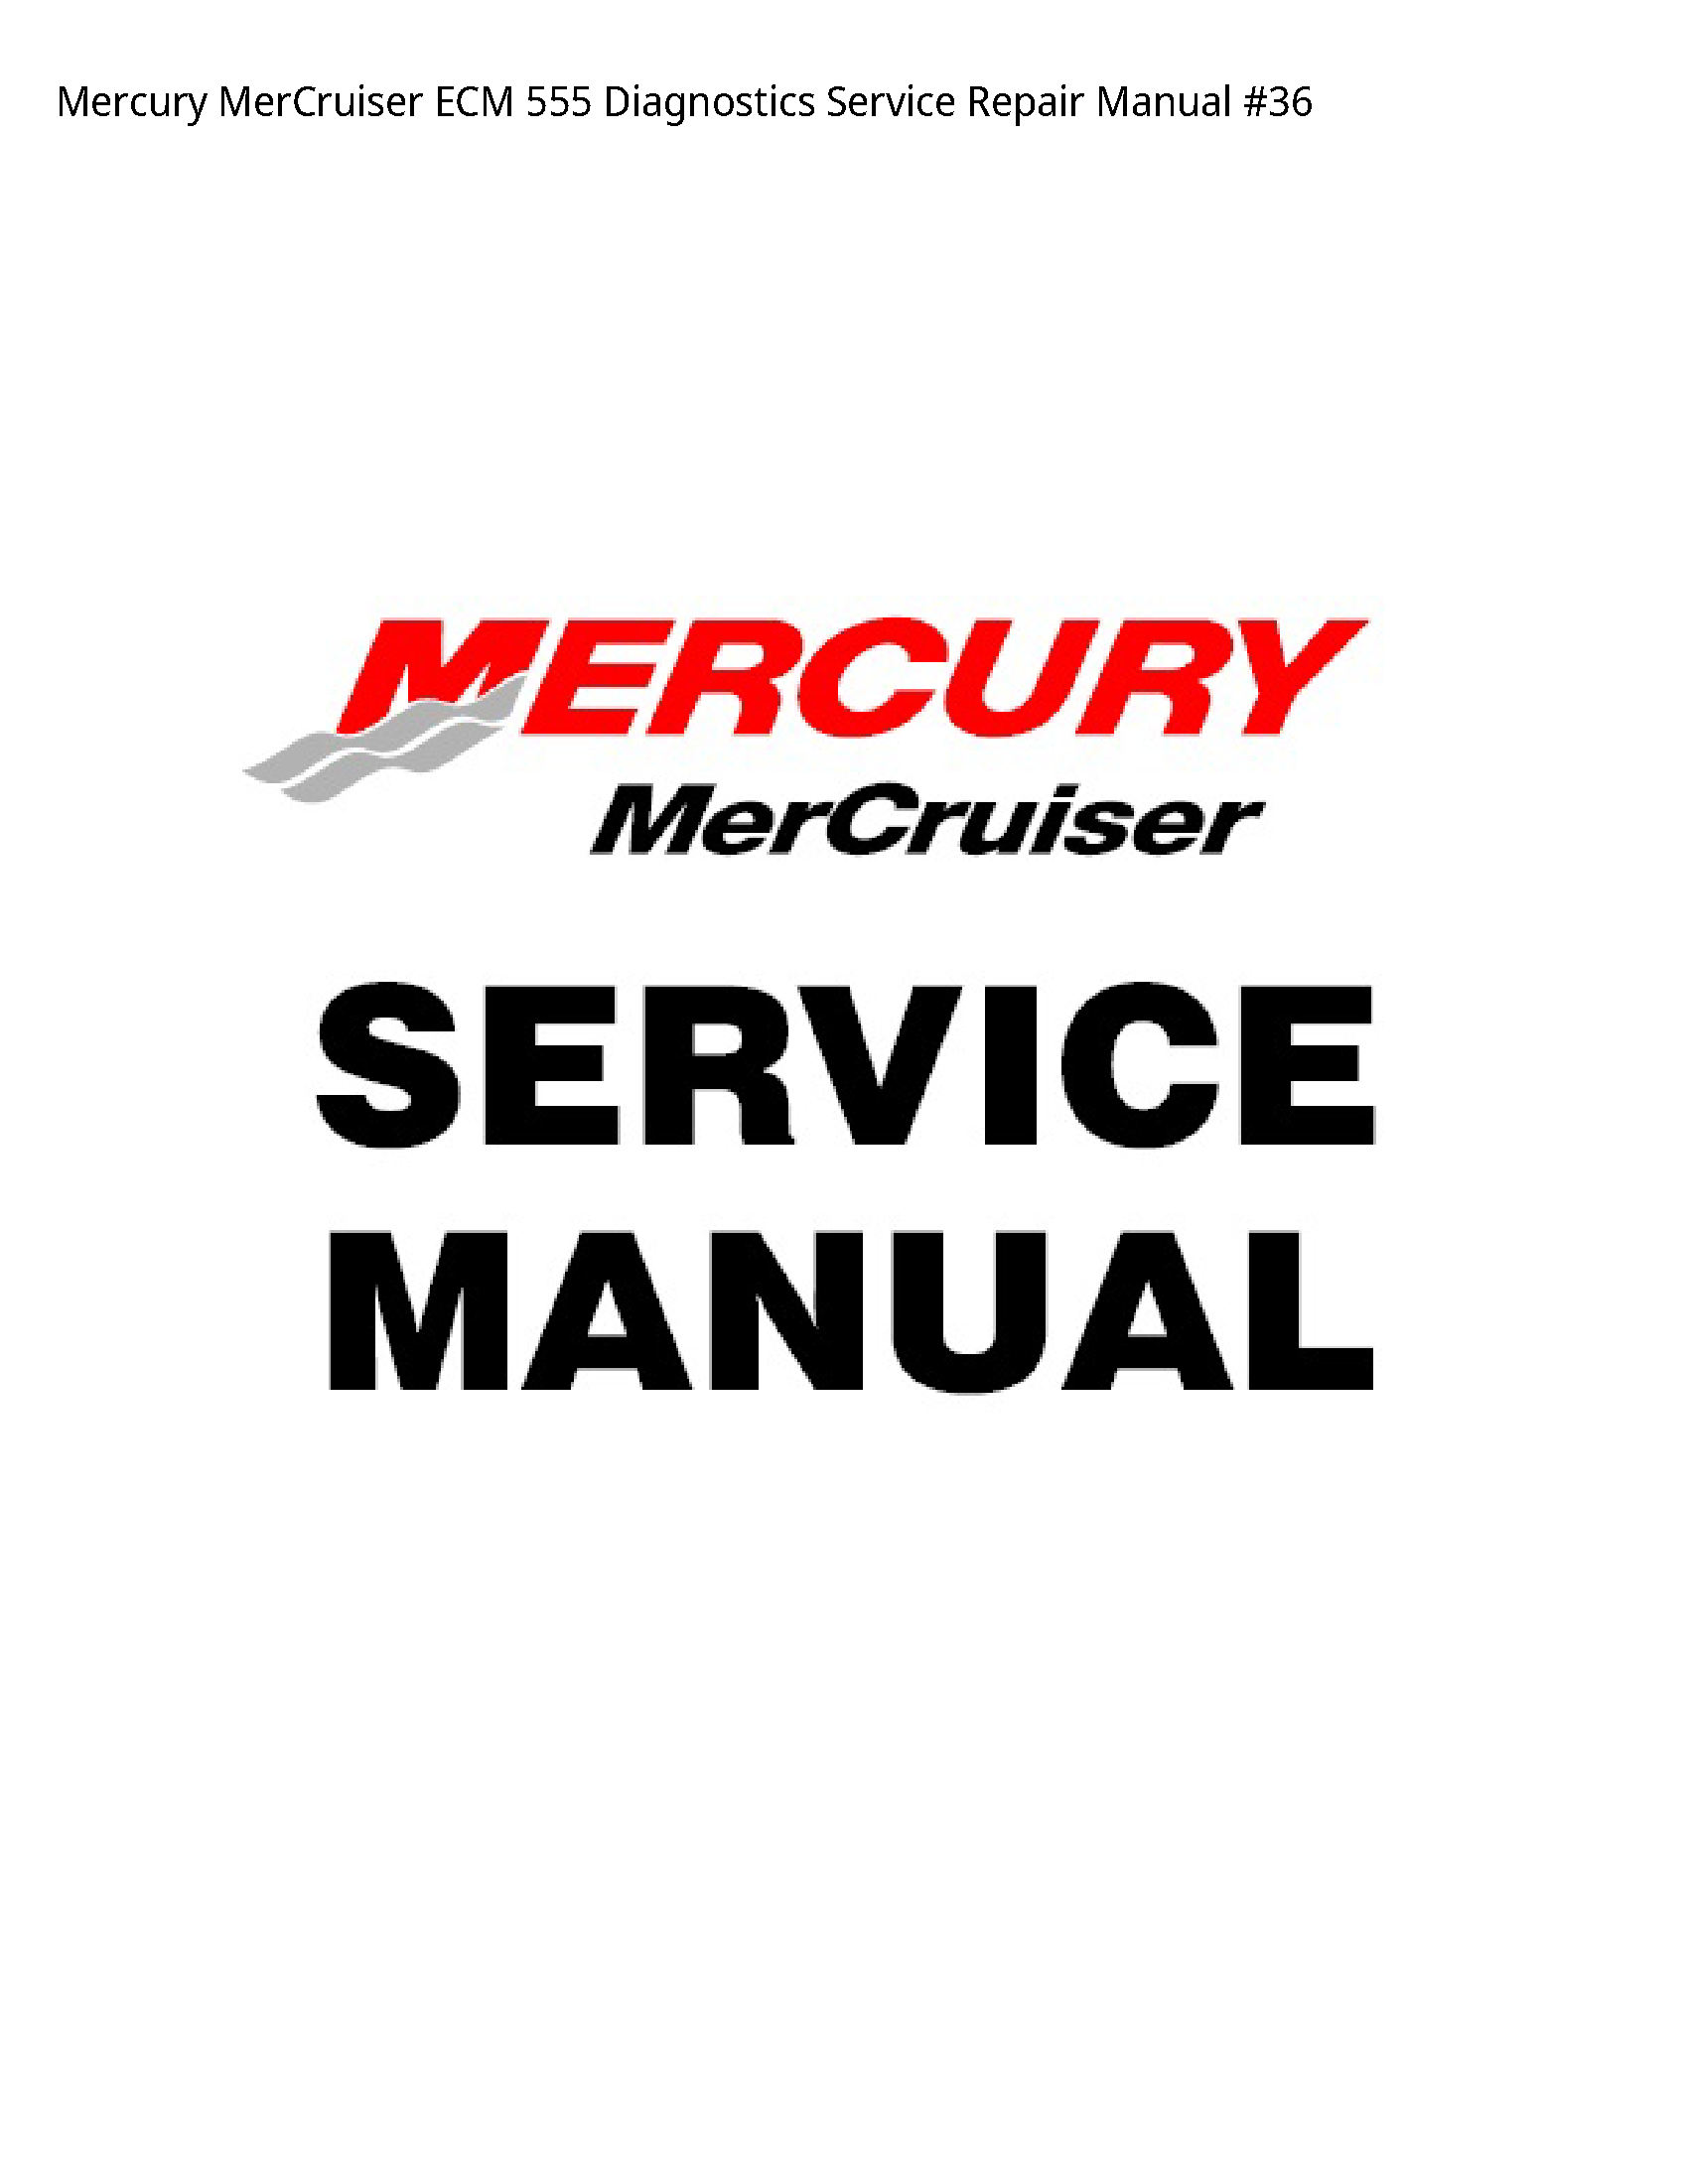 Mercury 555 MerCruiser ECM Diagnostics manual